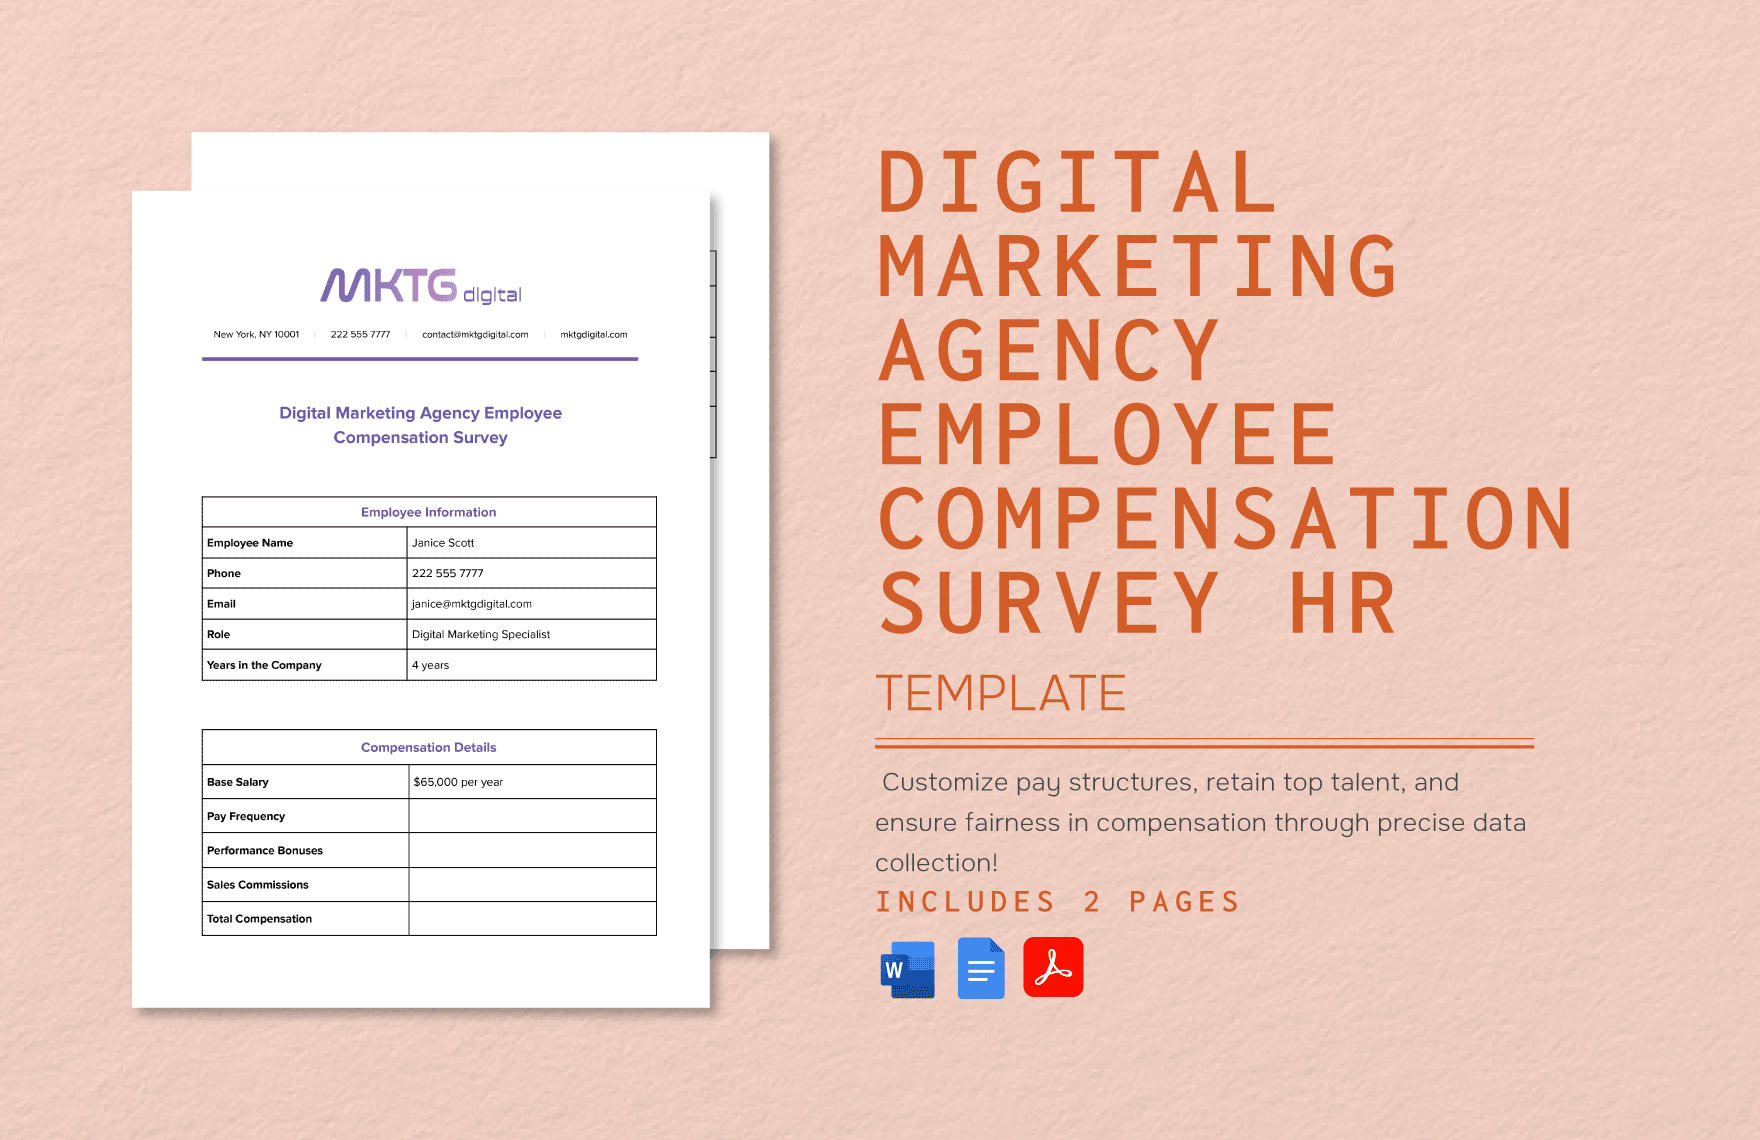 Digital Marketing Agency Employee Compensation Survey HR Template